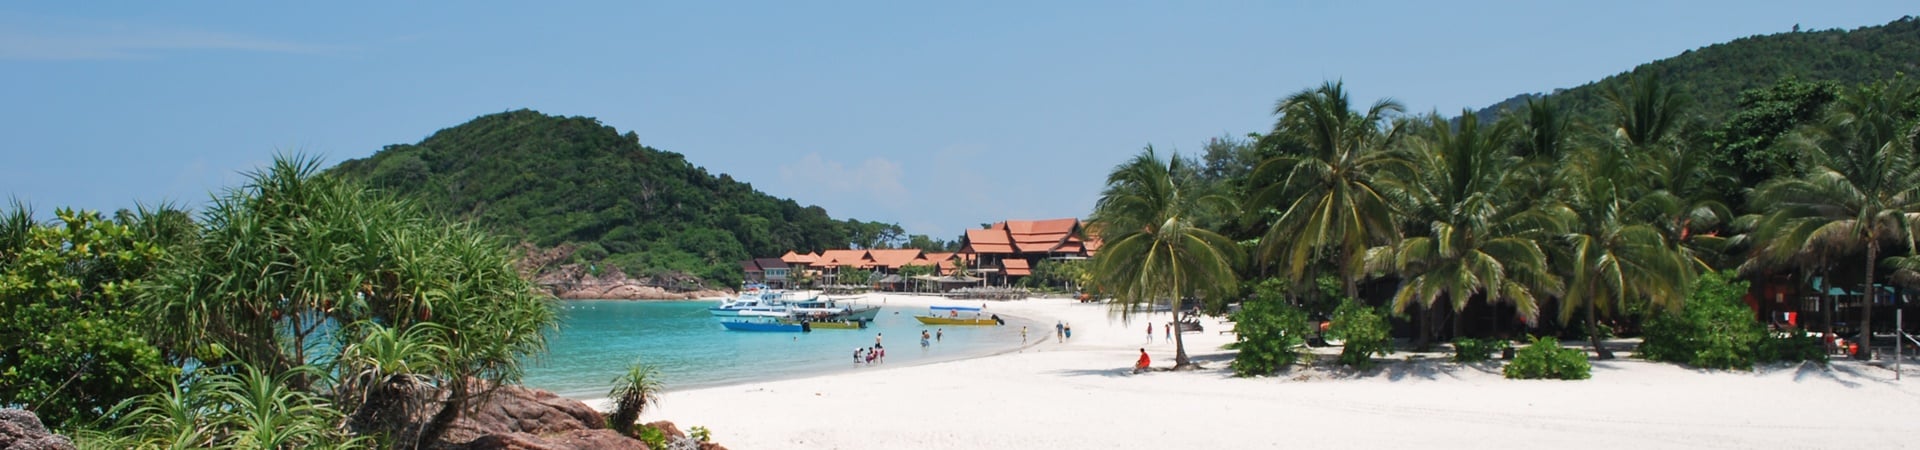 Beach Break at Pulau Redang